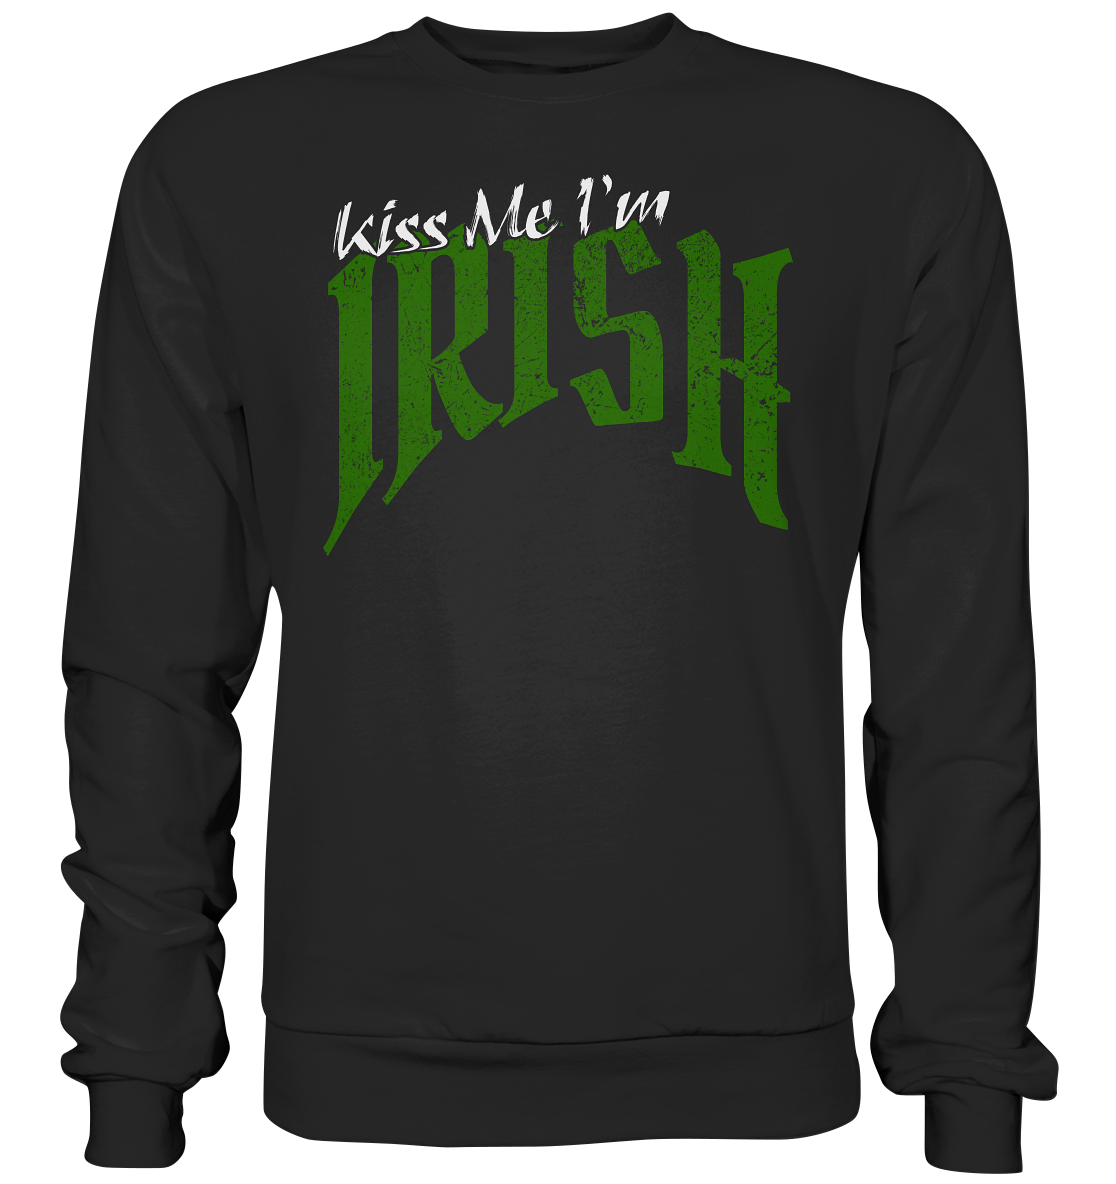 Kiss Me "I'm Irish" - Premium Sweatshirt